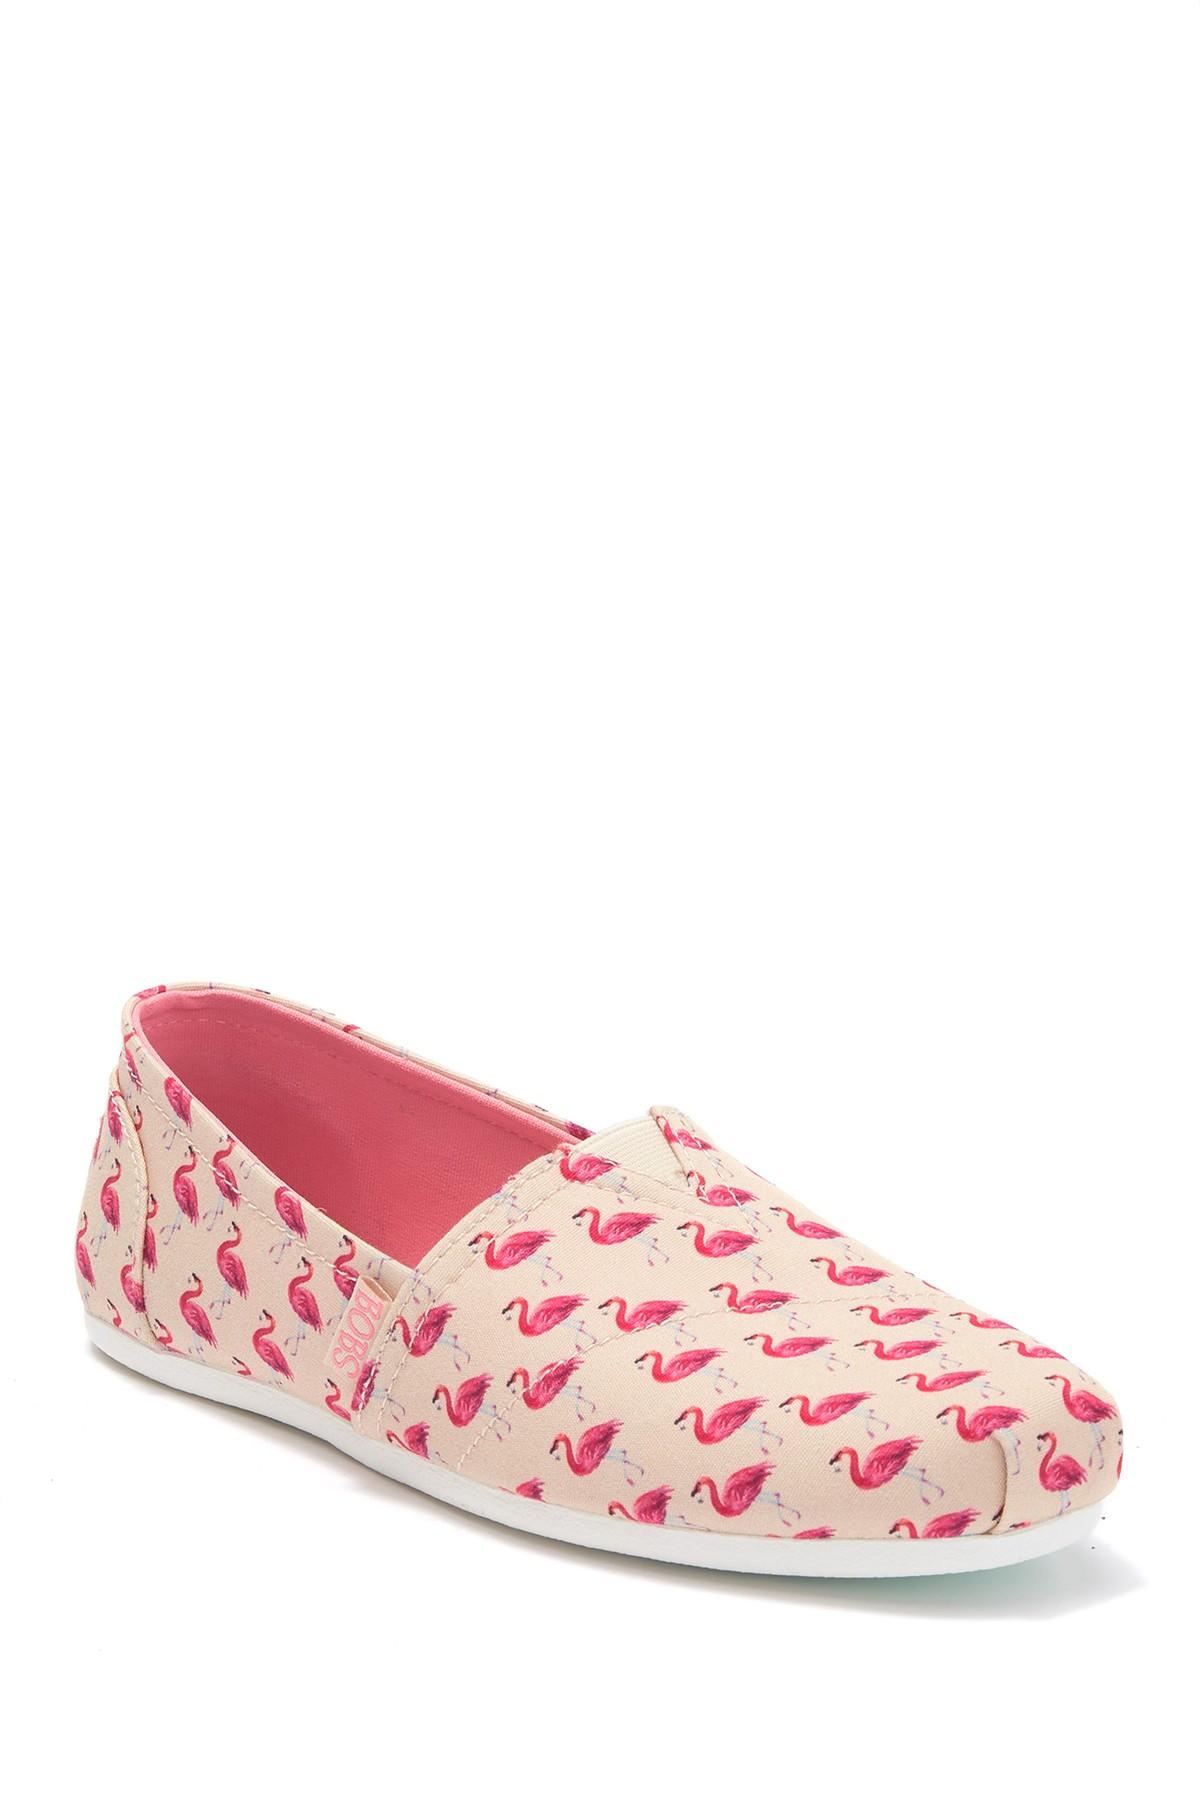 Skechers Bobs Flamingo Slip-on Sneaker in Pink - Lyst